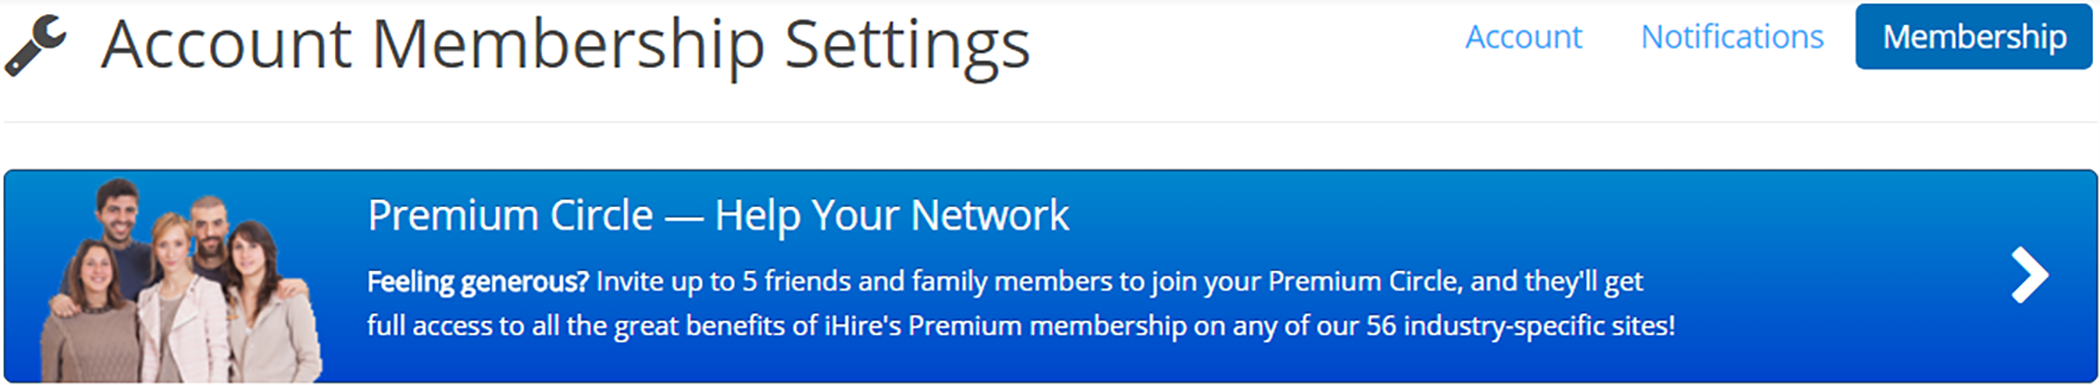 Screenshot of iHire's Account Membership settings